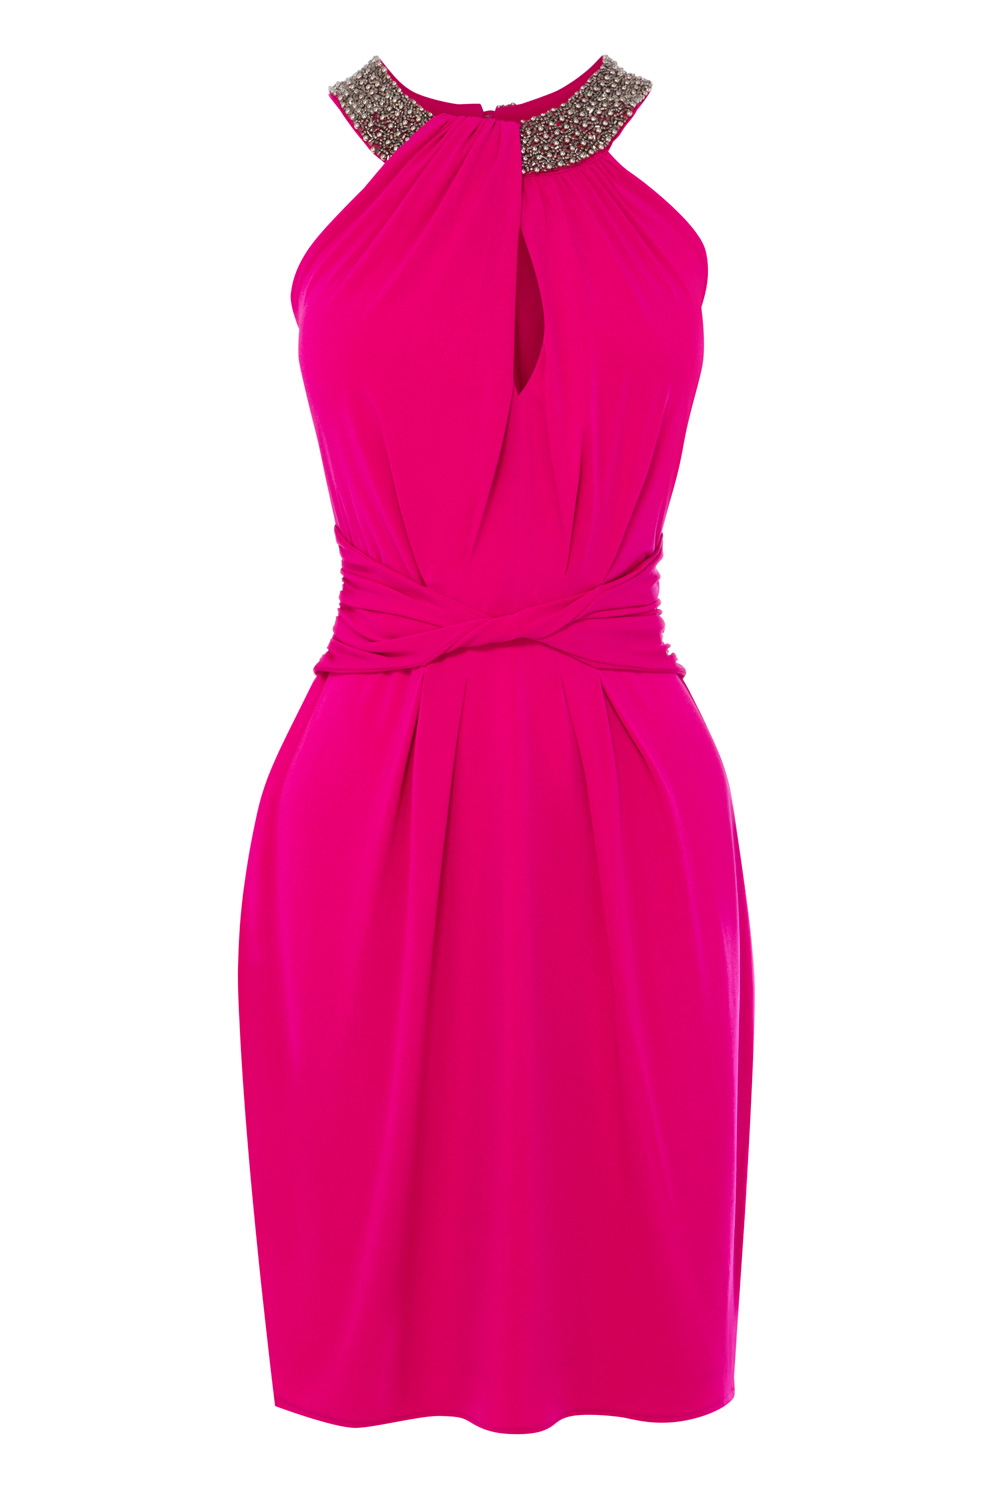 Lyst - Coast Eva Halter Dress in Pink